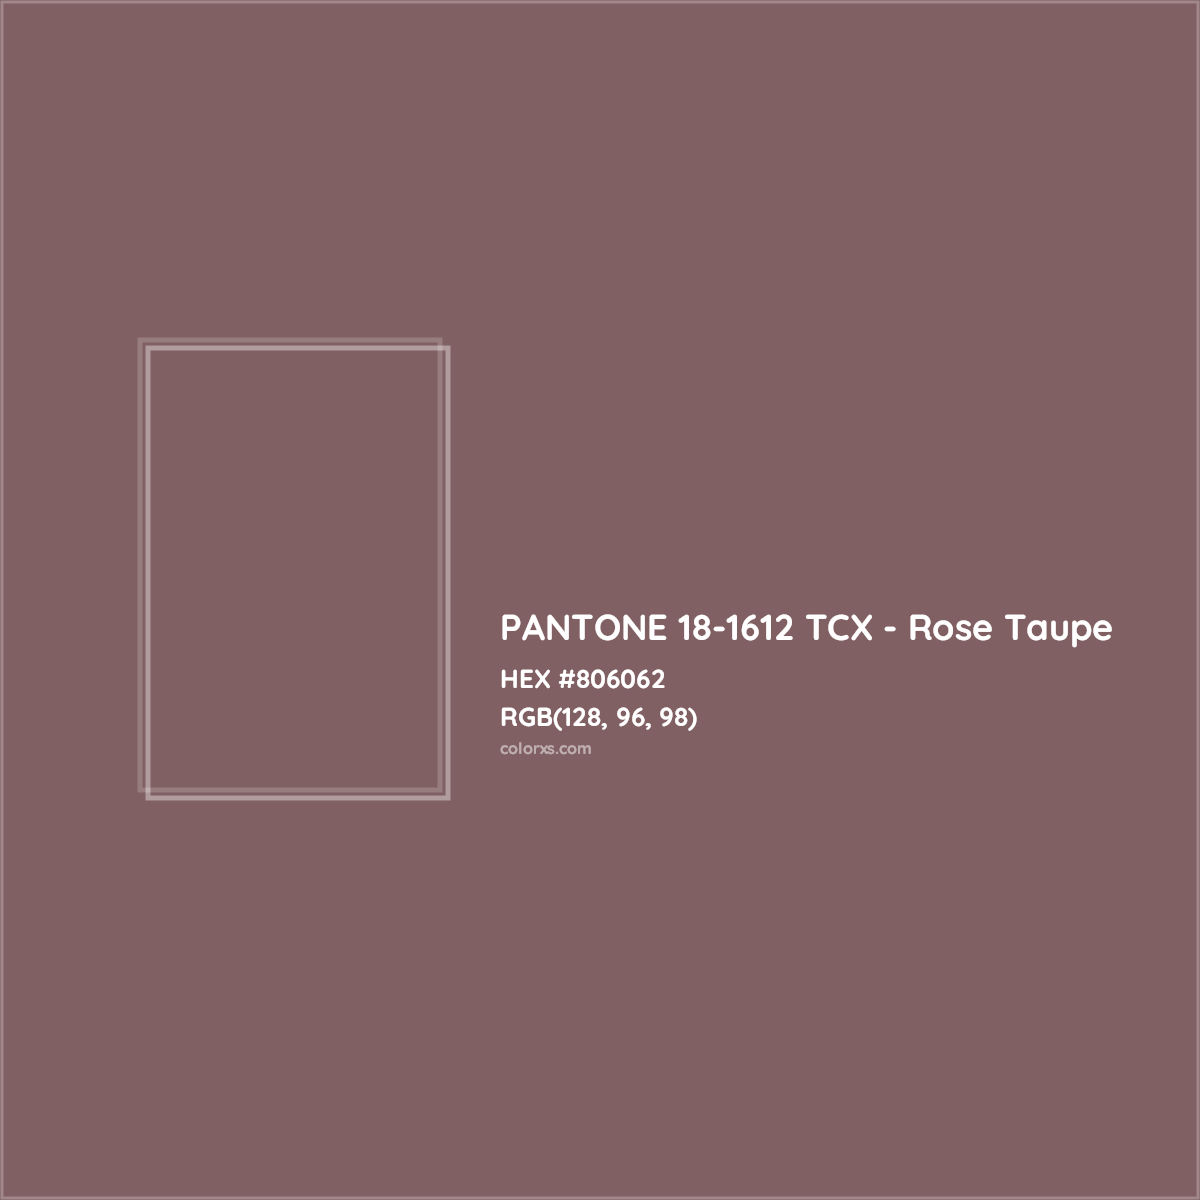 HEX #806062 PANTONE 18-1612 TCX - Rose Taupe CMS Pantone TCX - Color Code